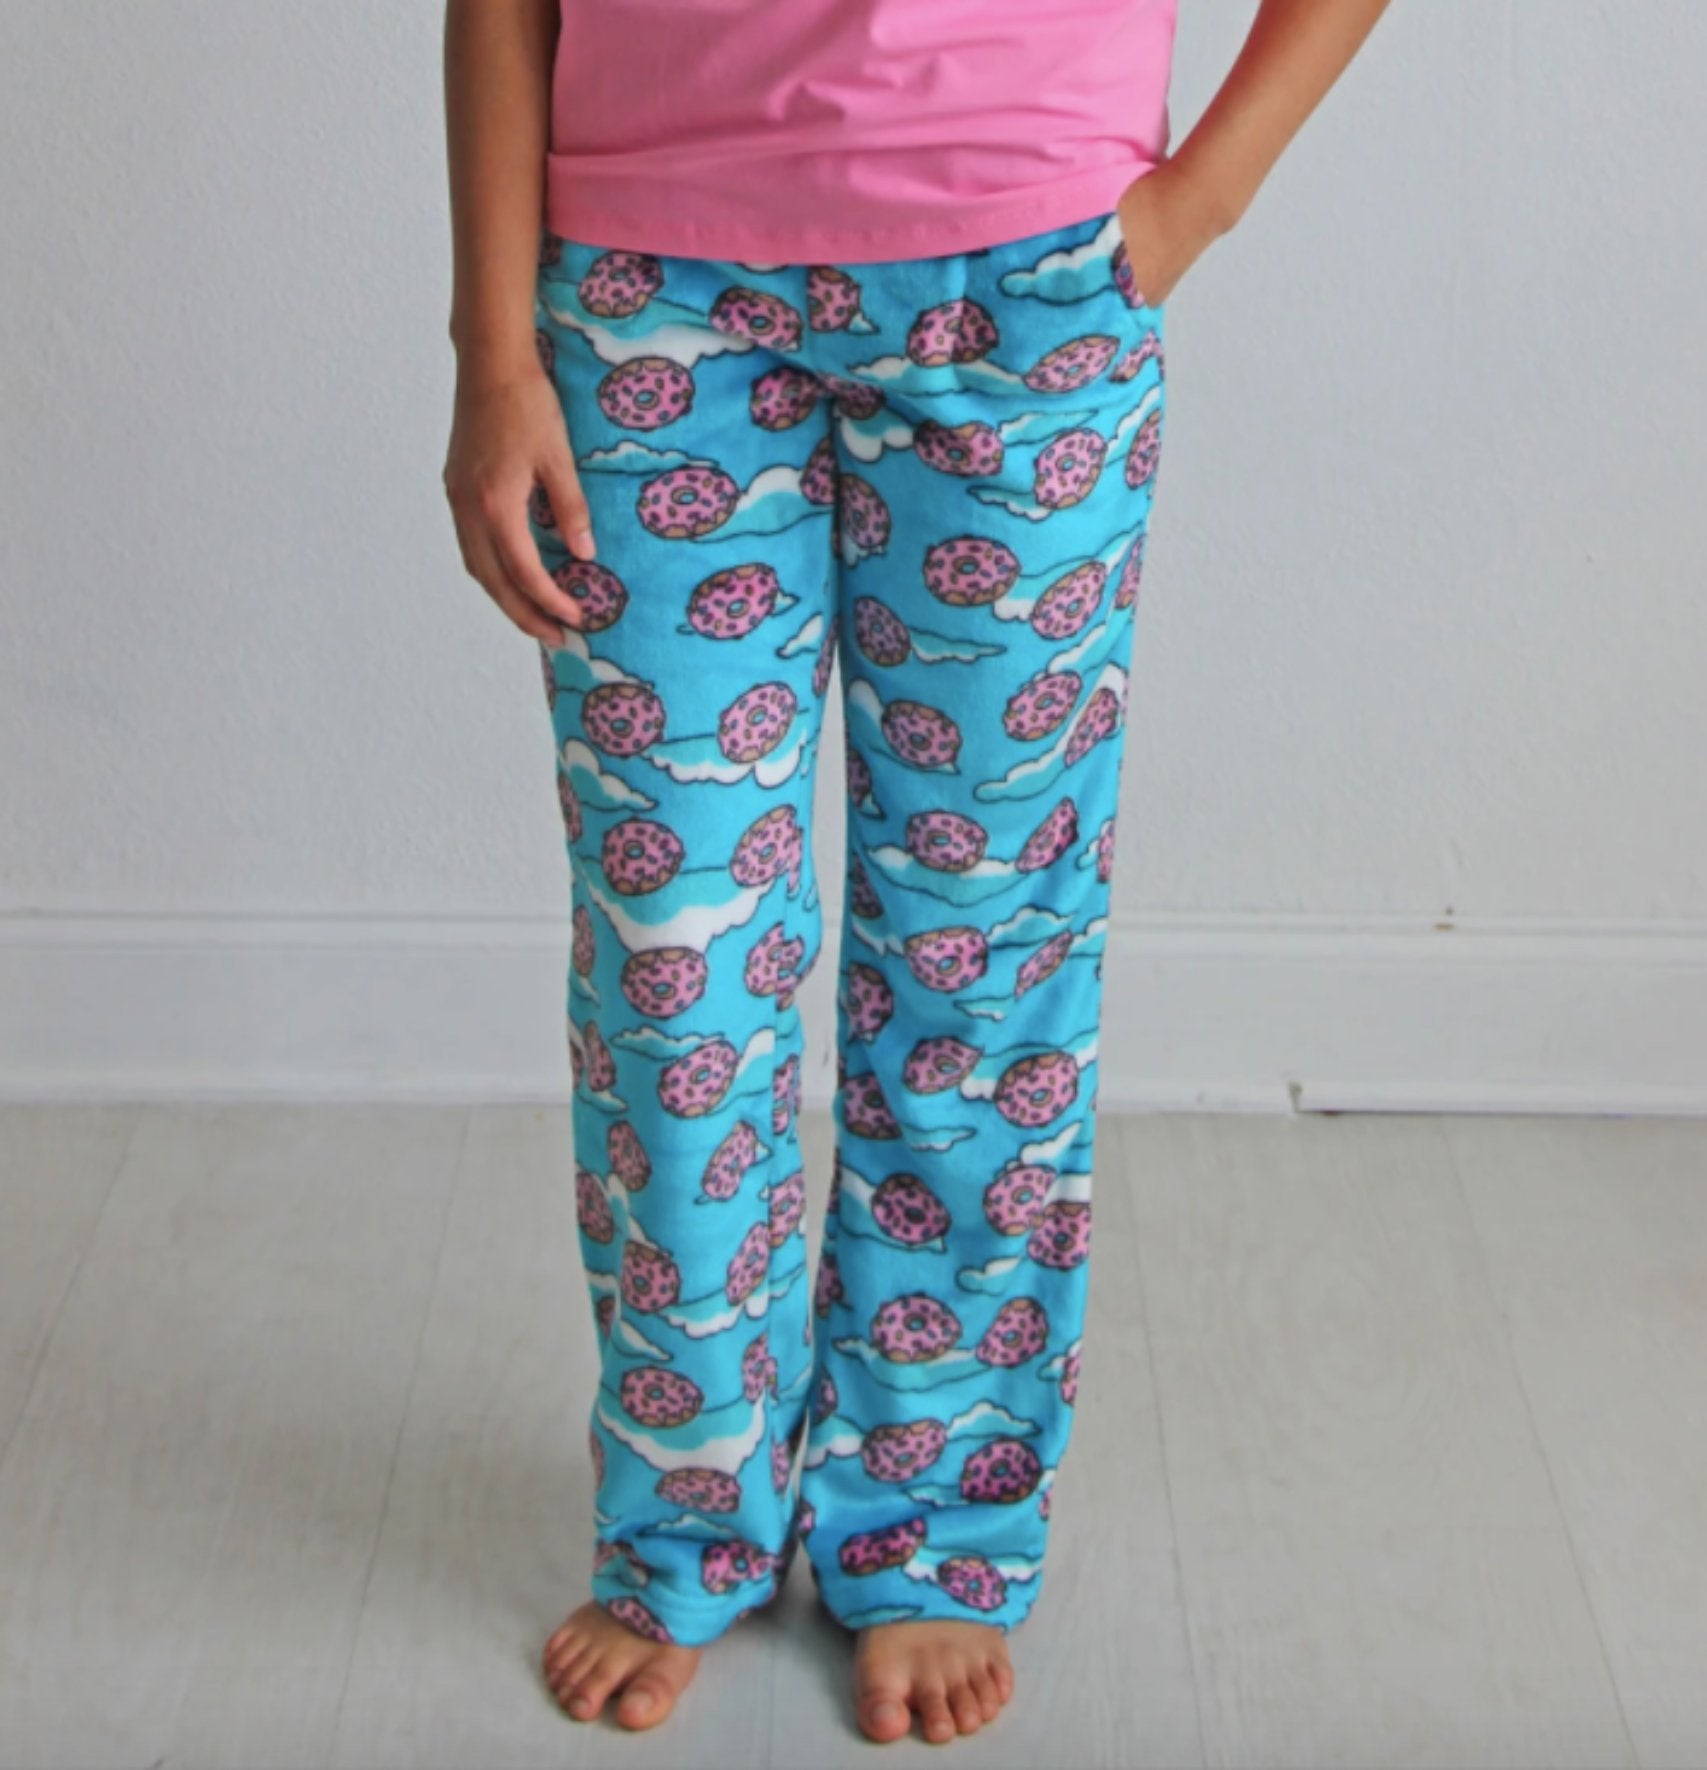 Women's Pattern Pajama Pants